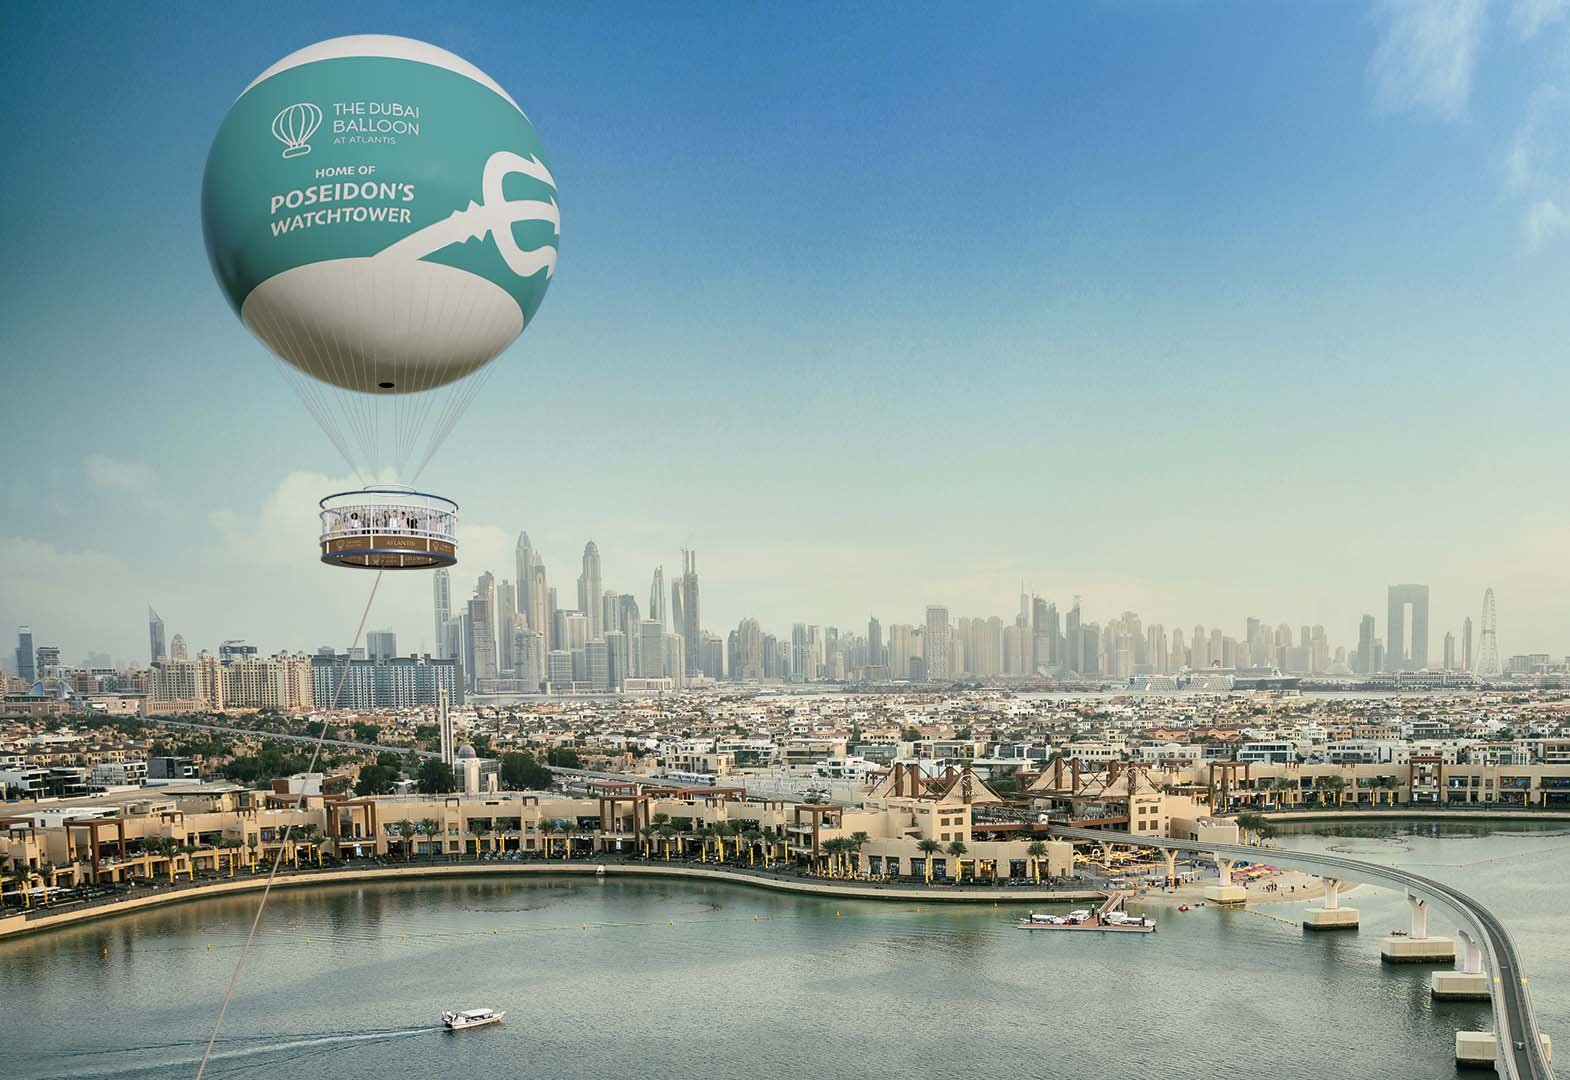 The Dubai Balloon Dubai information, bookings, images, videos, map, and more